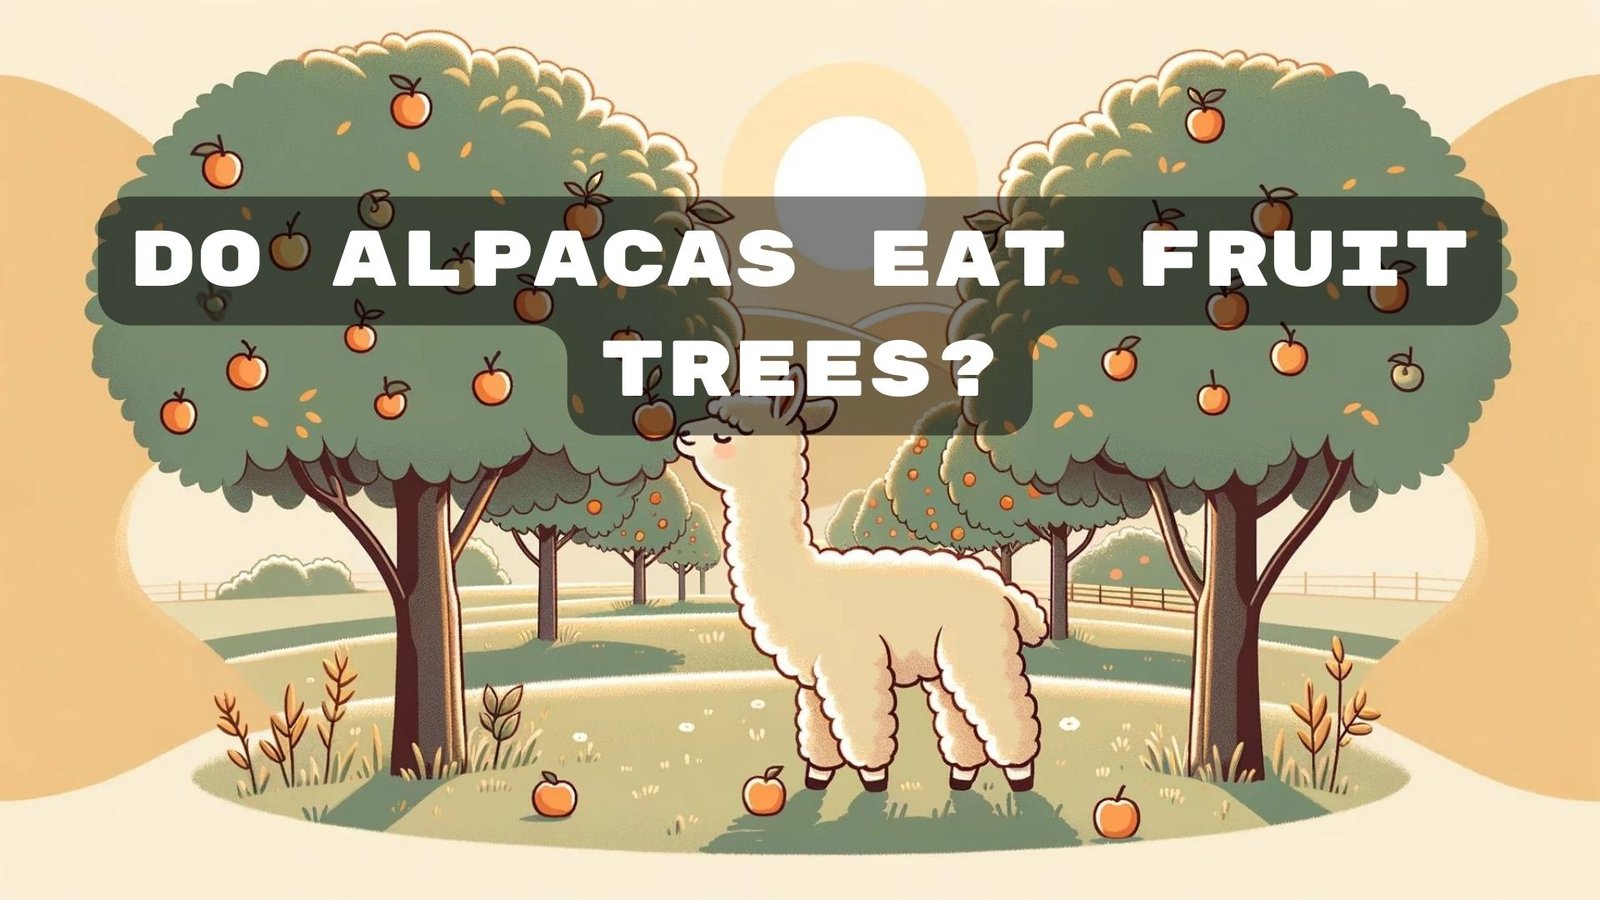 Do alpacas eat fruit trees?